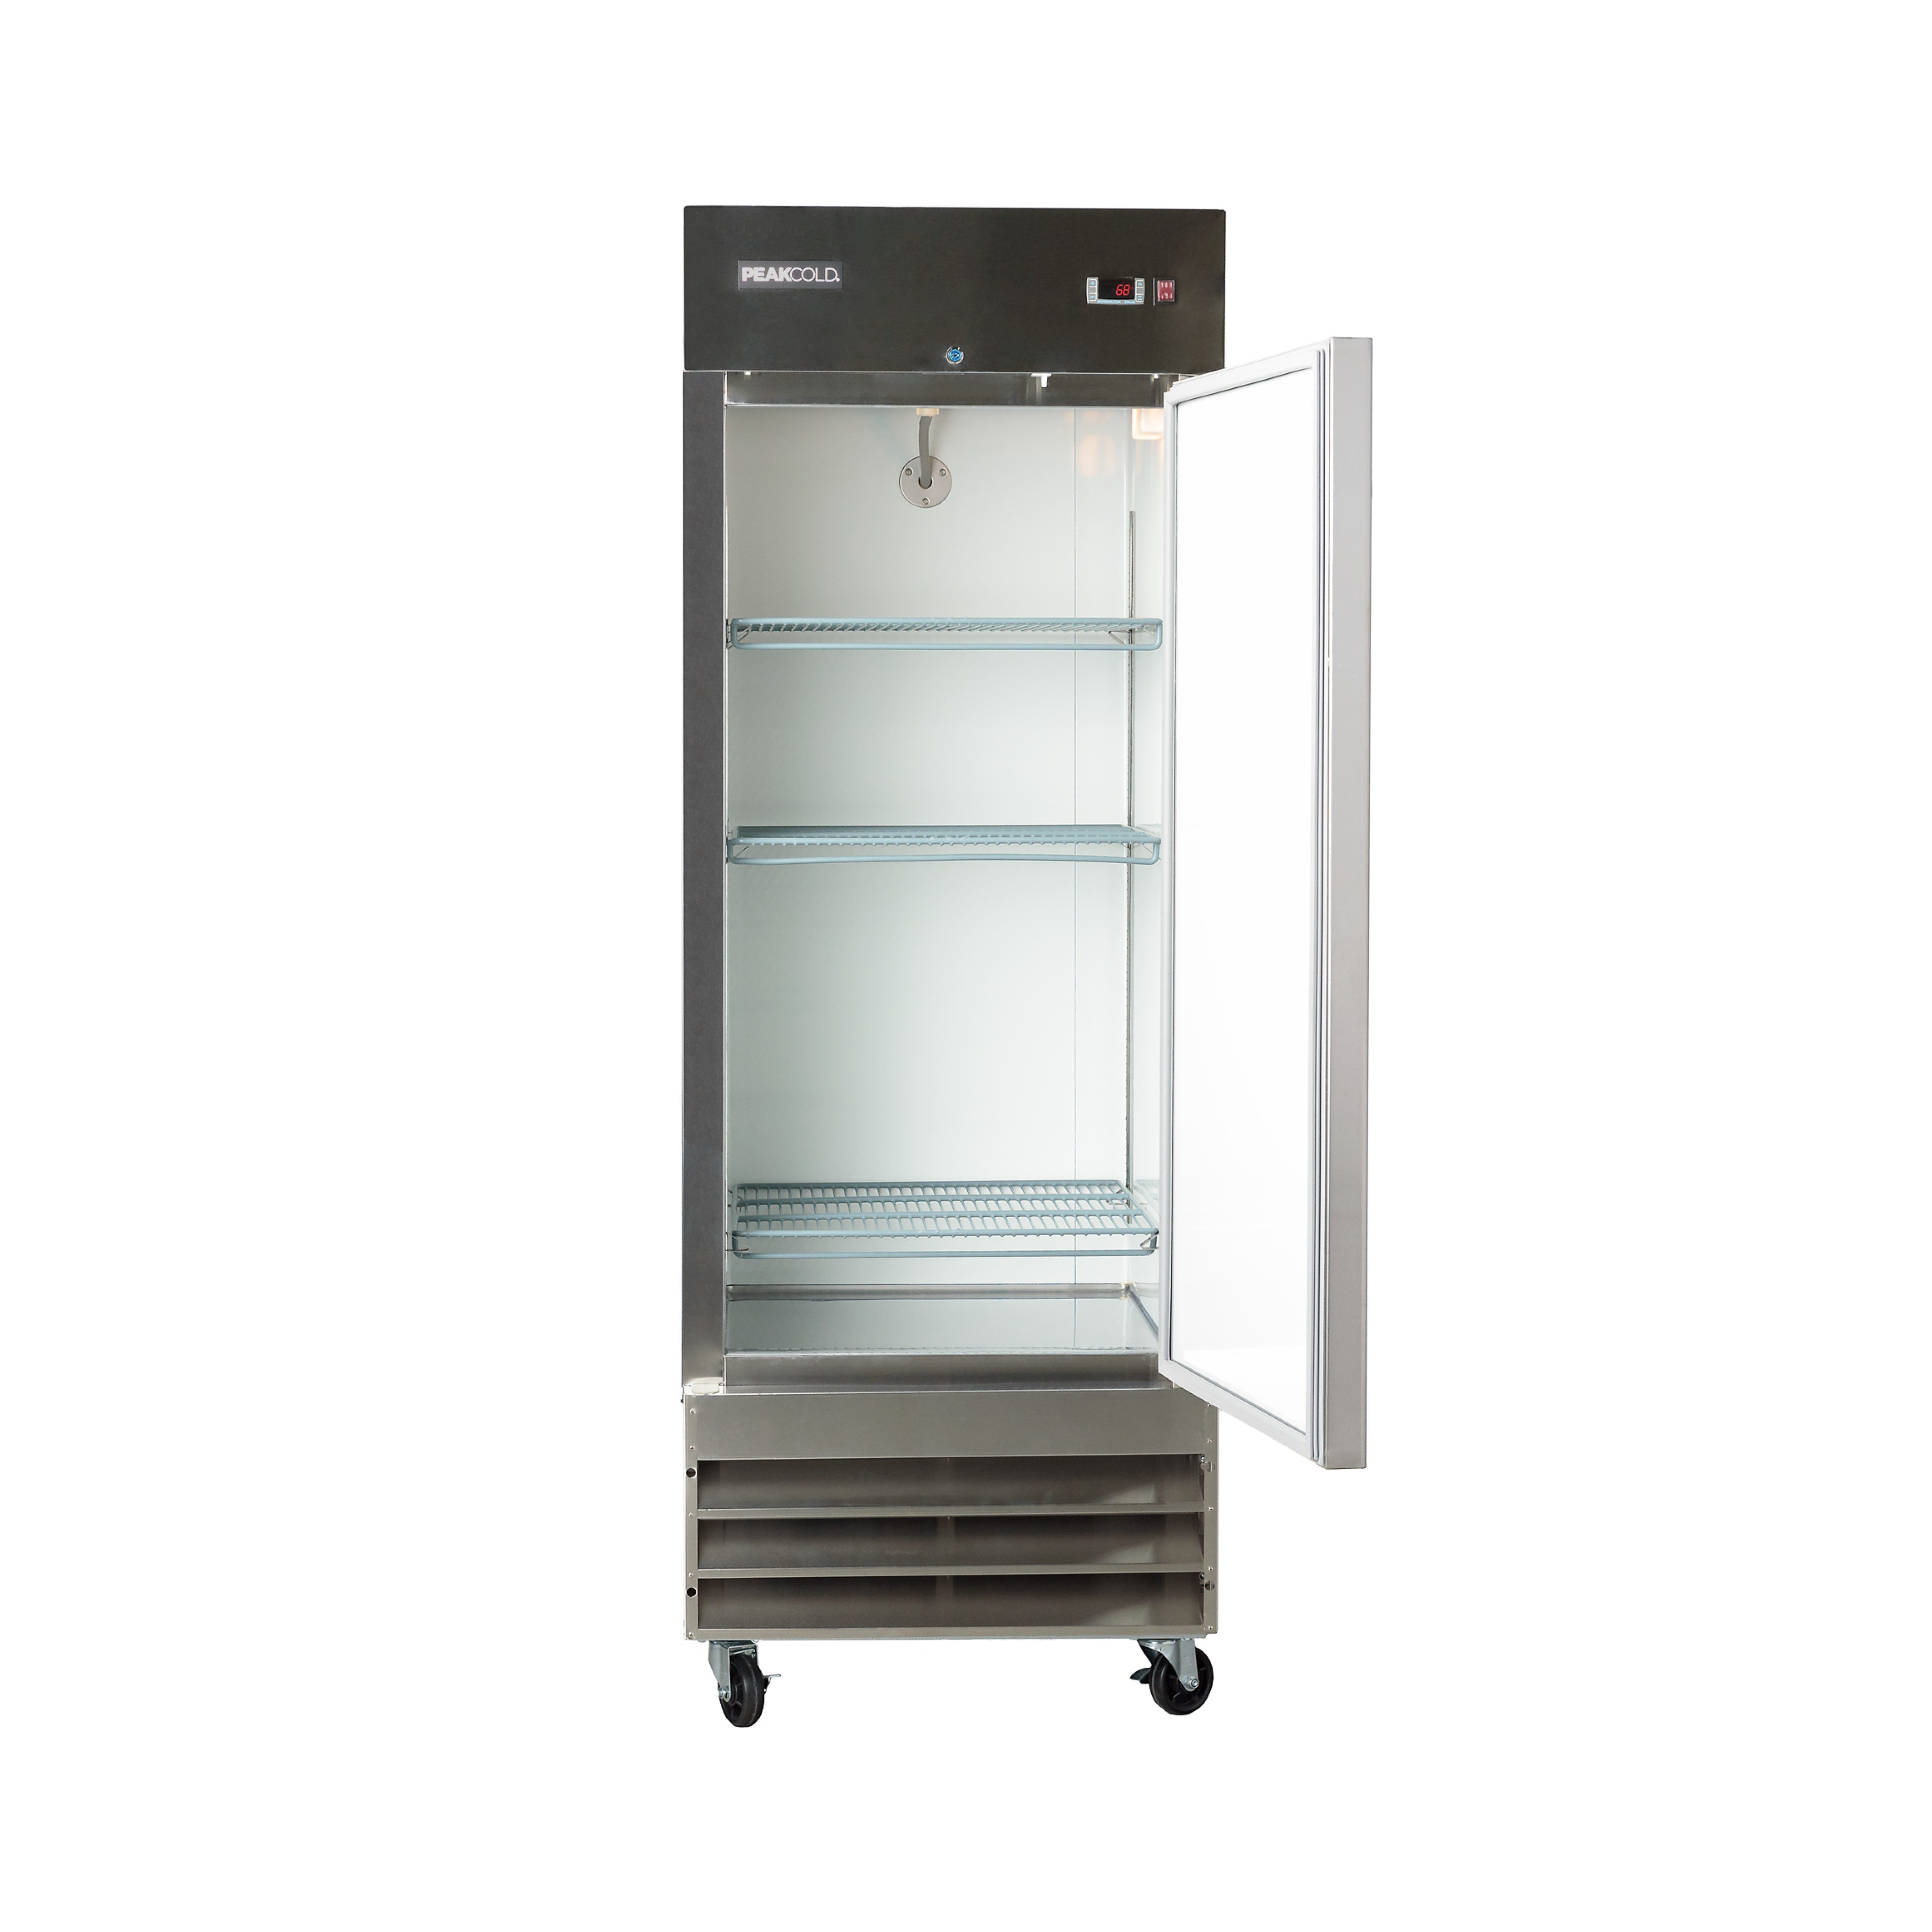 PeakCold Stainless Steel Single Door Commercial Refrigerator